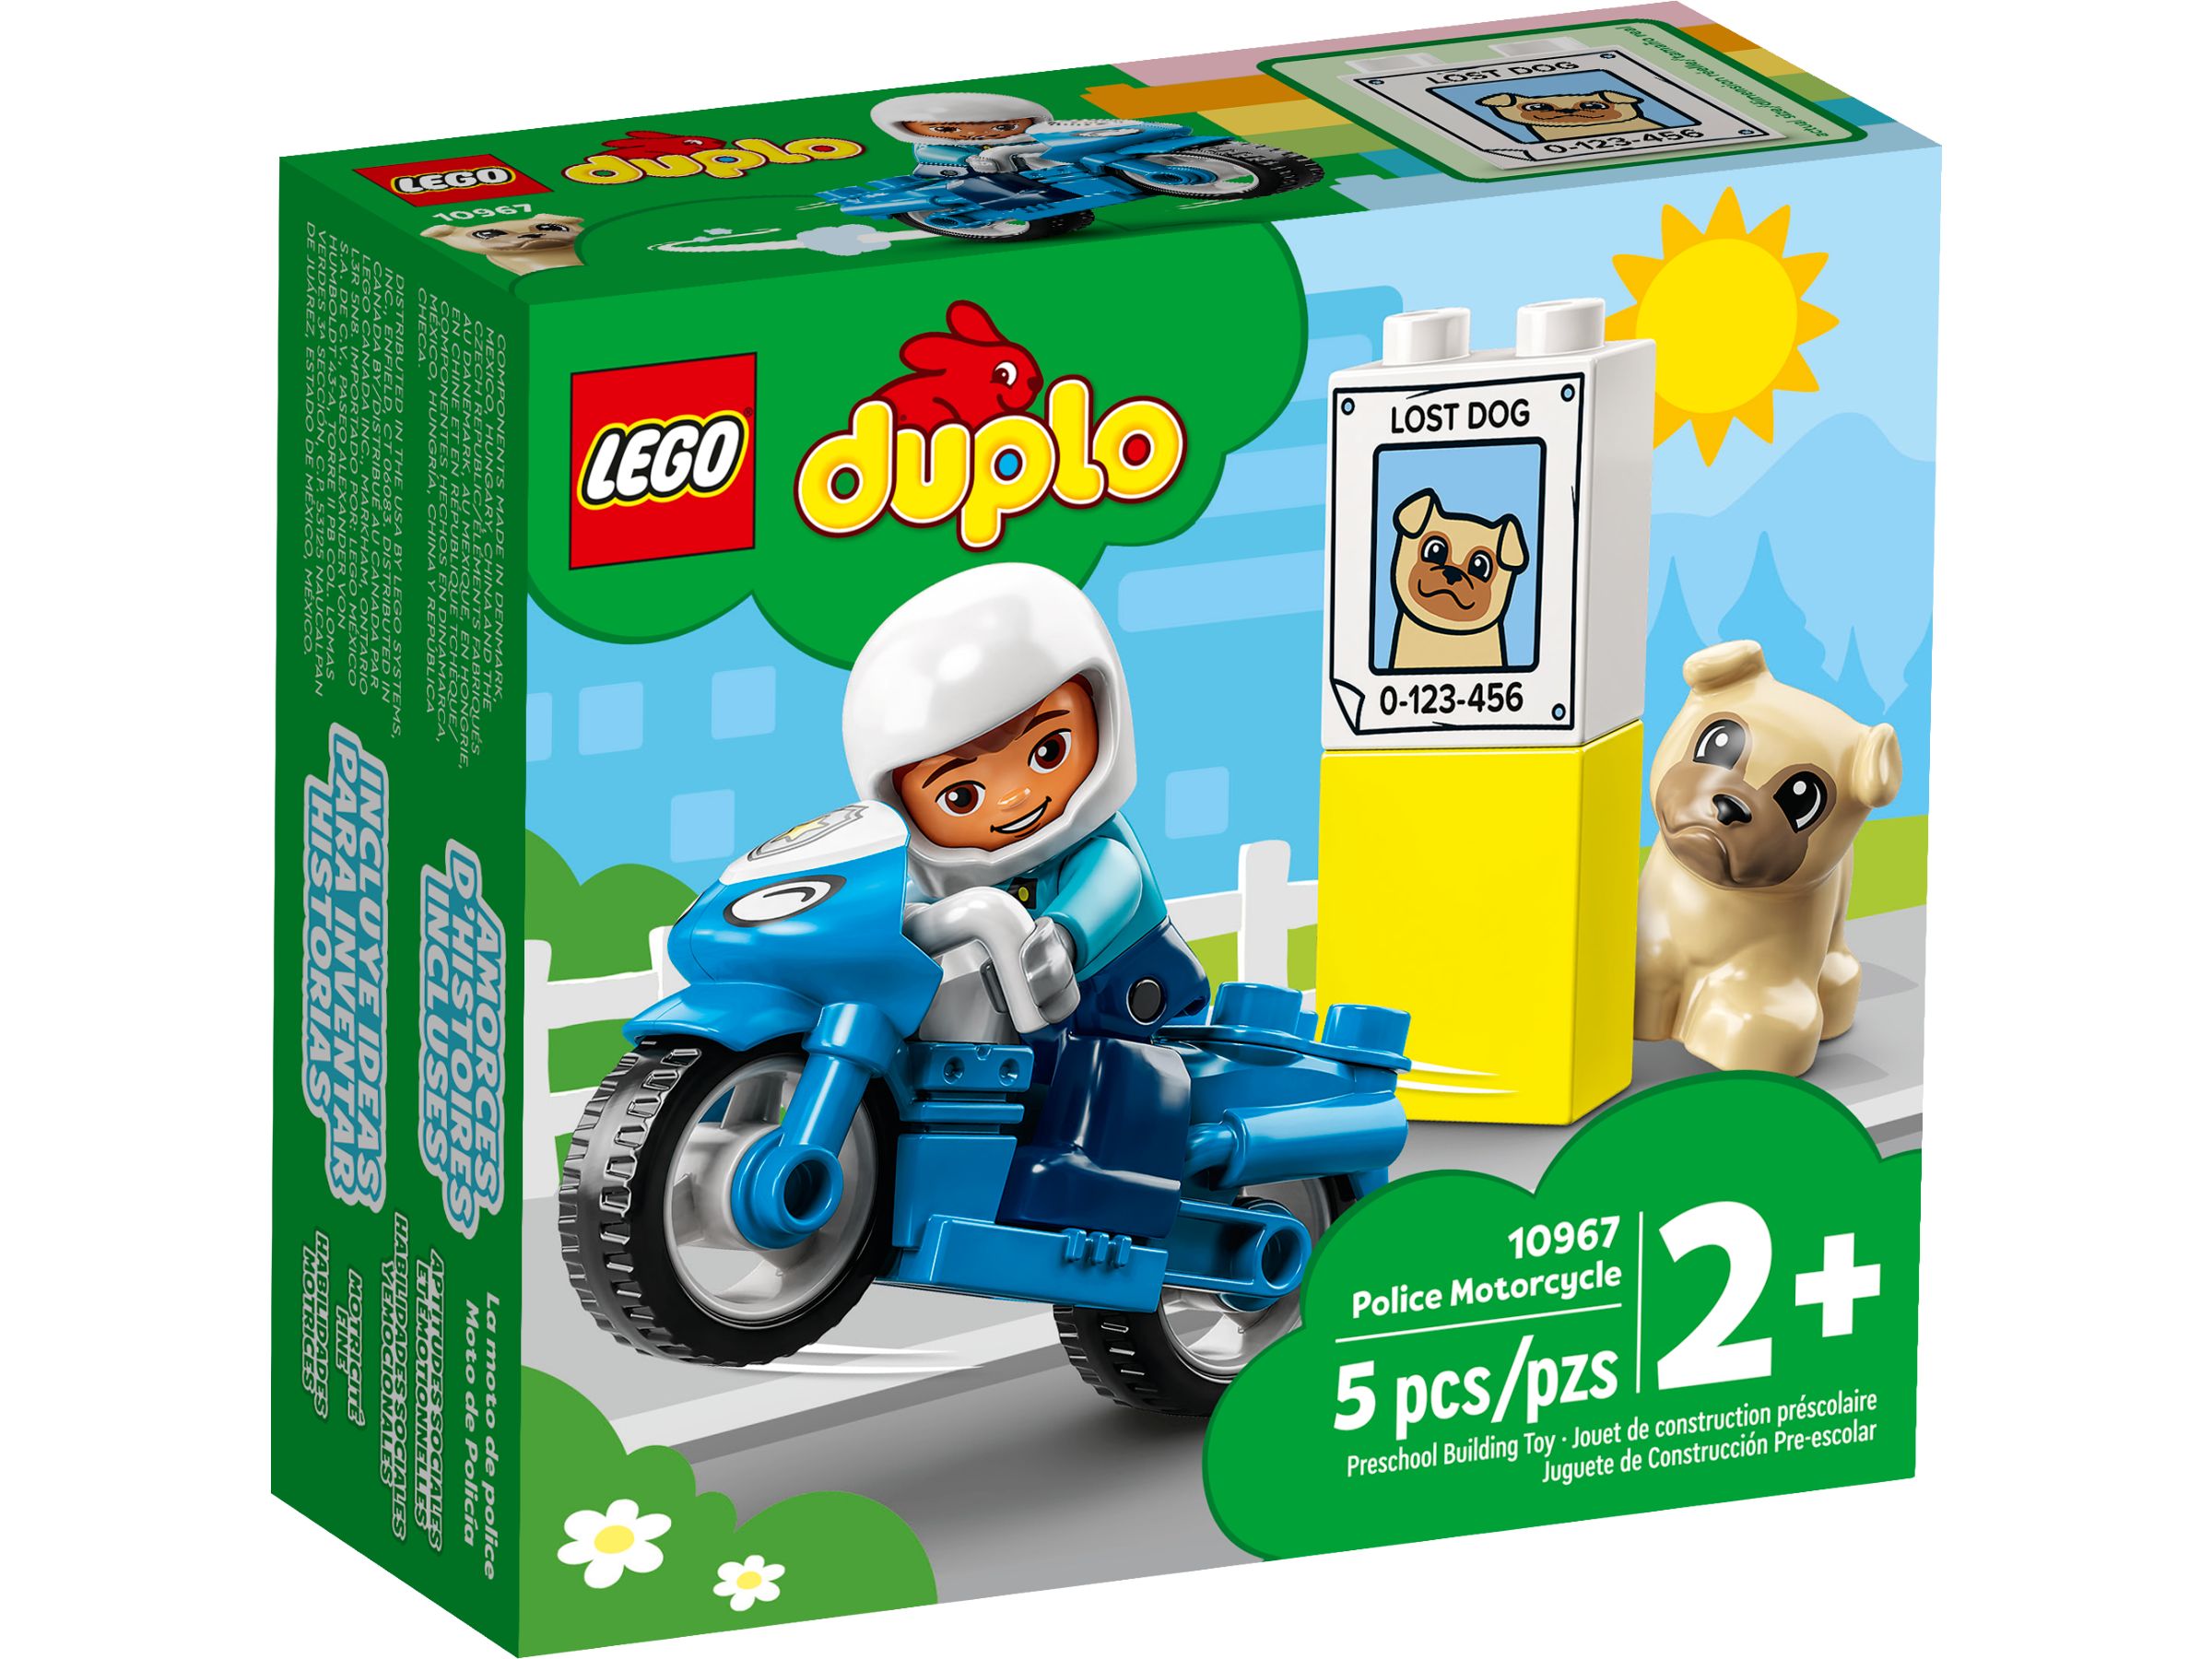 LEGO Duplo 10967 Polizeimotorrad LEGO_10967_alt1.jpg